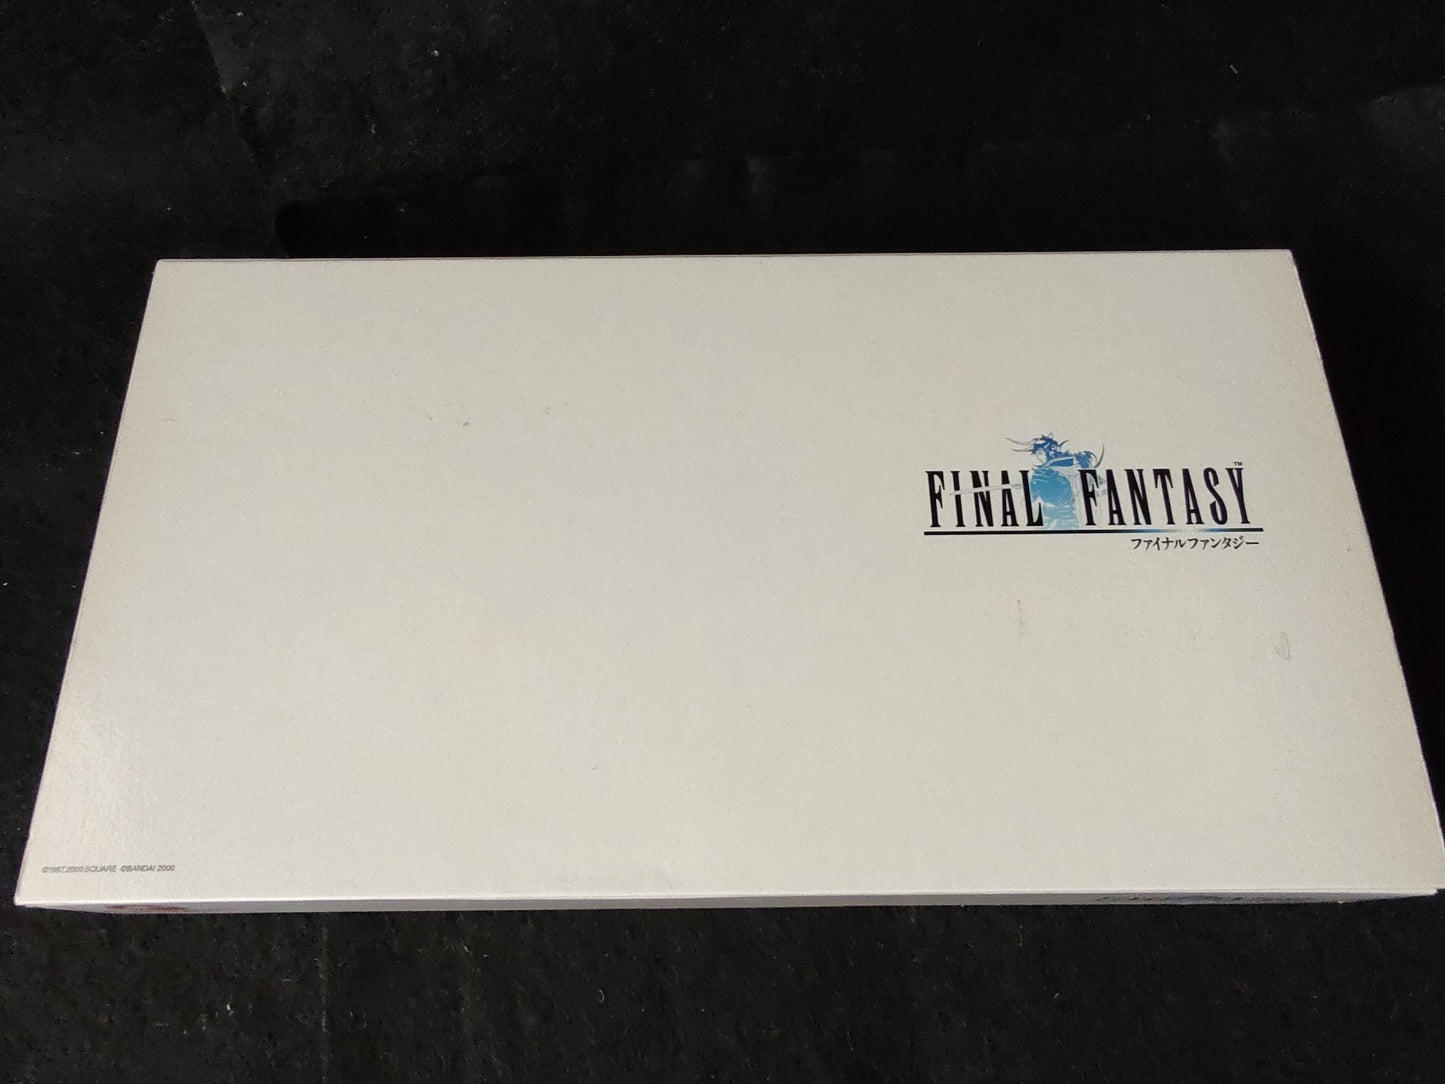 BANDAI Wonder Swan Color Final Fantasy Limited model console Boxes set-f0908-